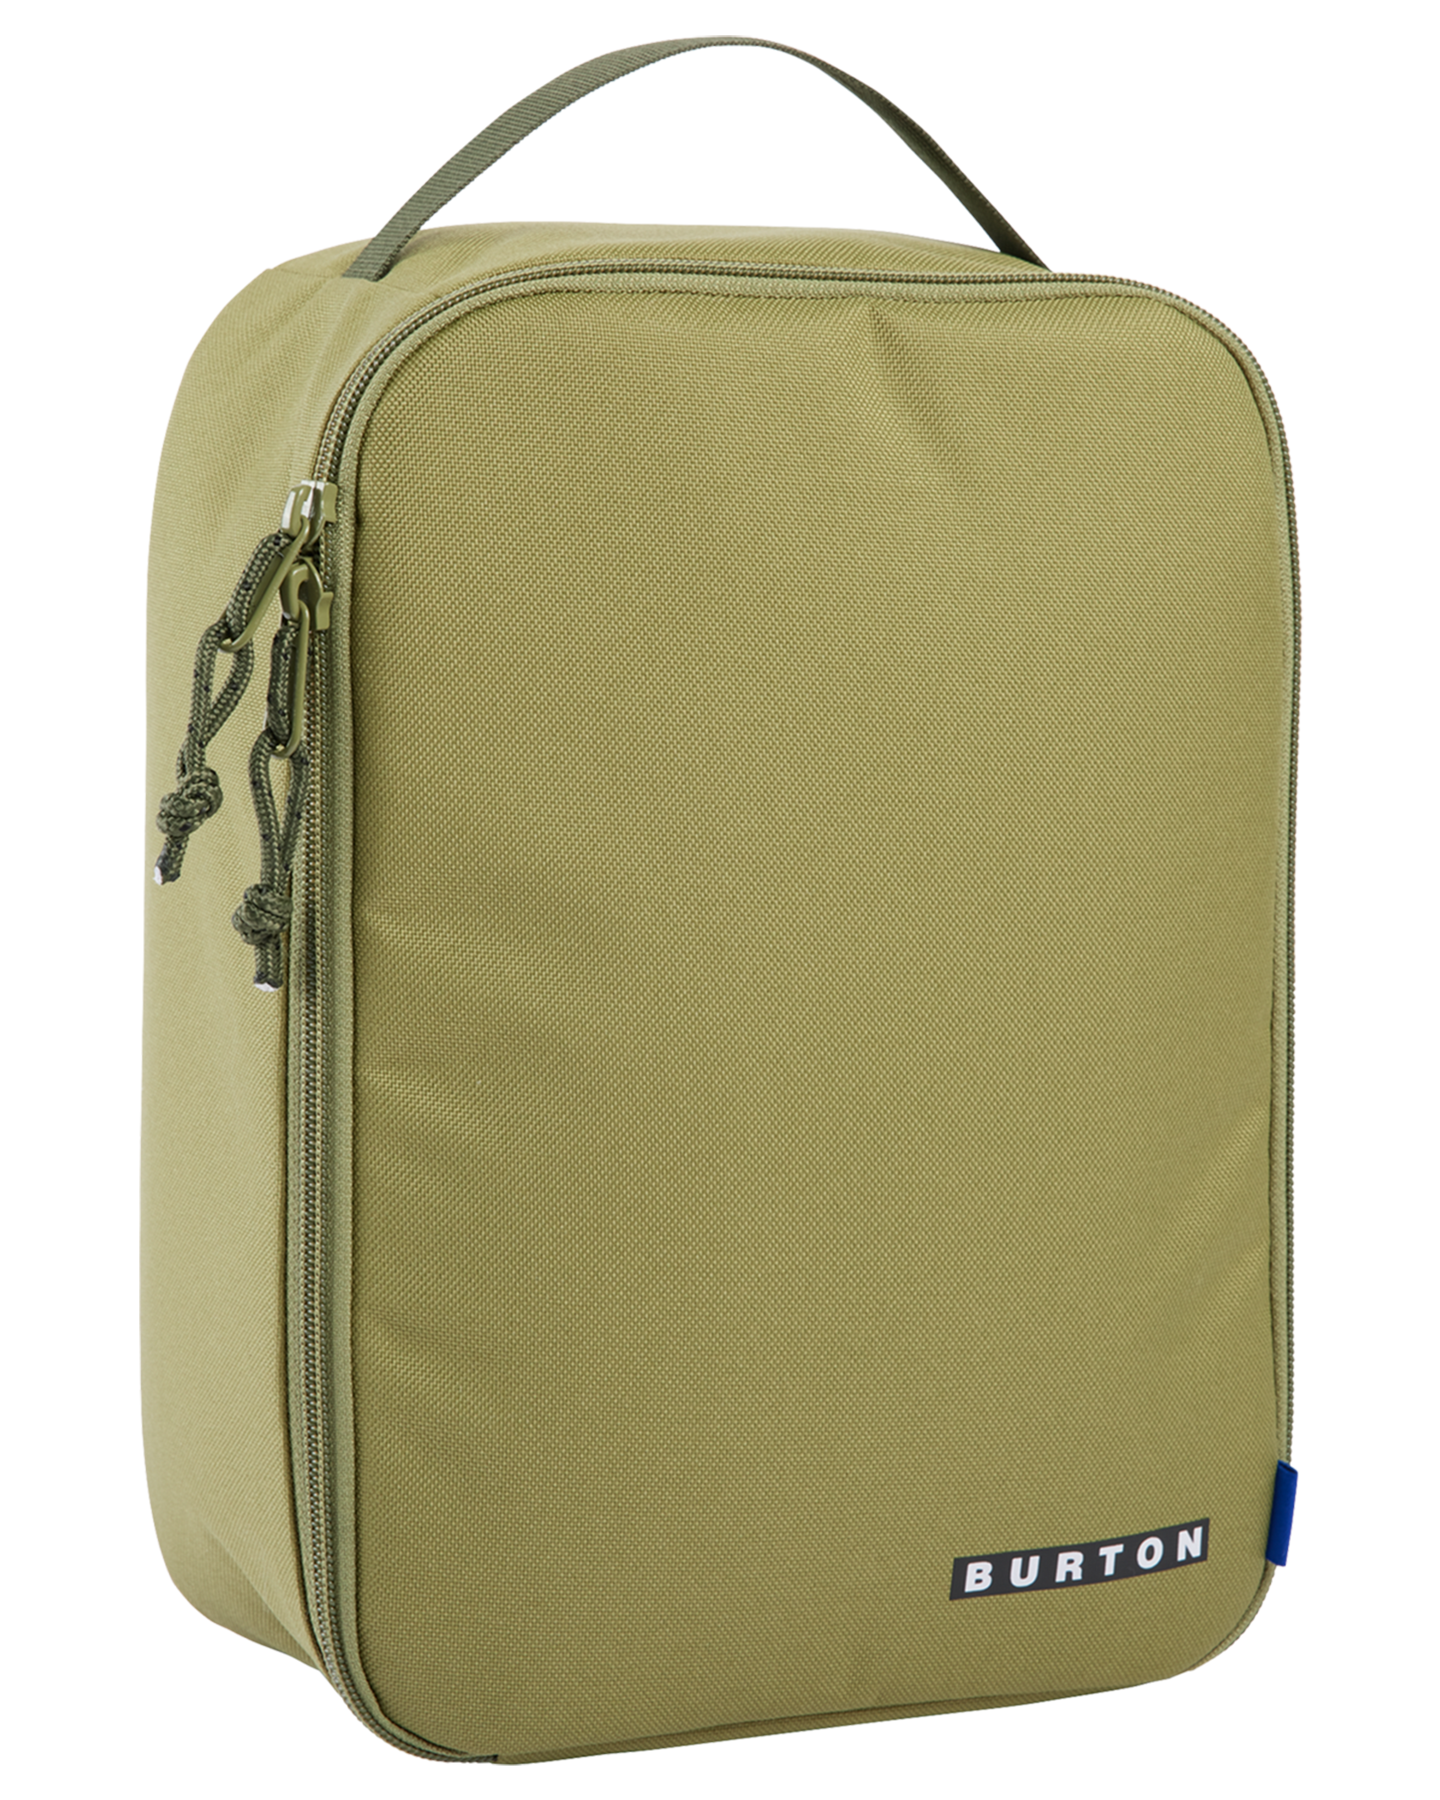 Burton Lunch-N-Box 8L Cooler Bag - Martini Olive Luggage Bags - SnowSkiersWarehouse